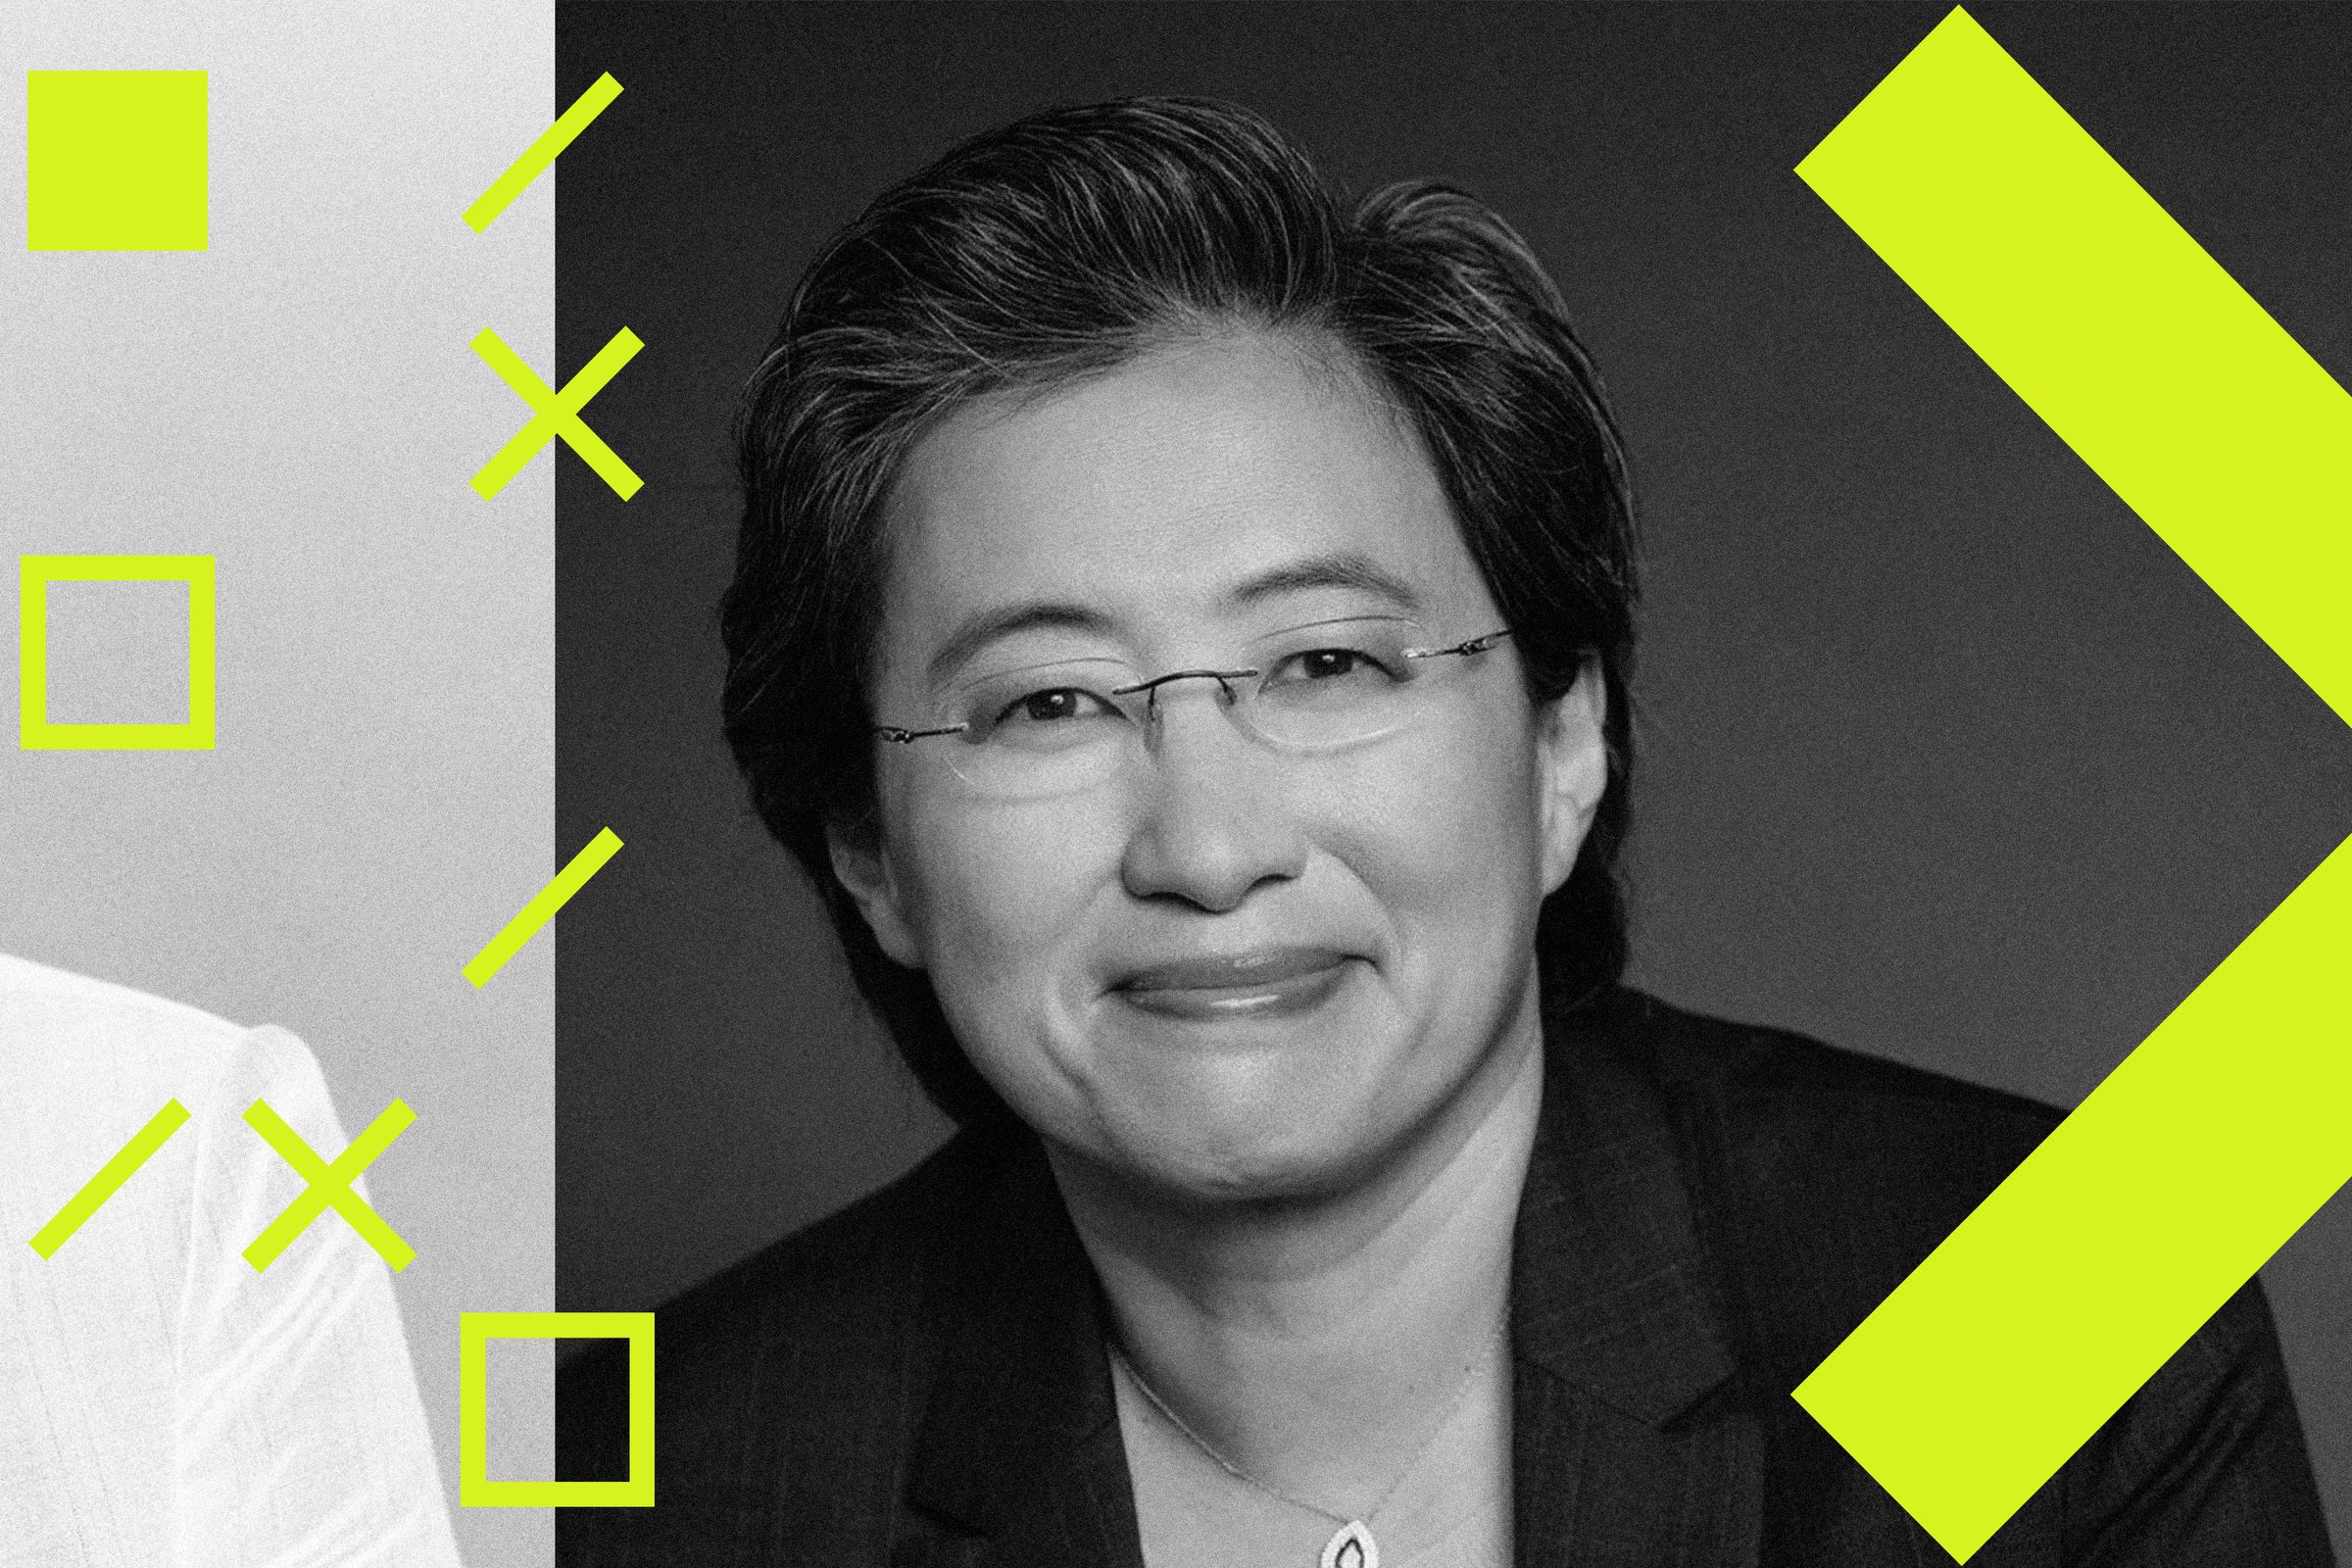 A portrait photo of AMD CEO Lisa Su.